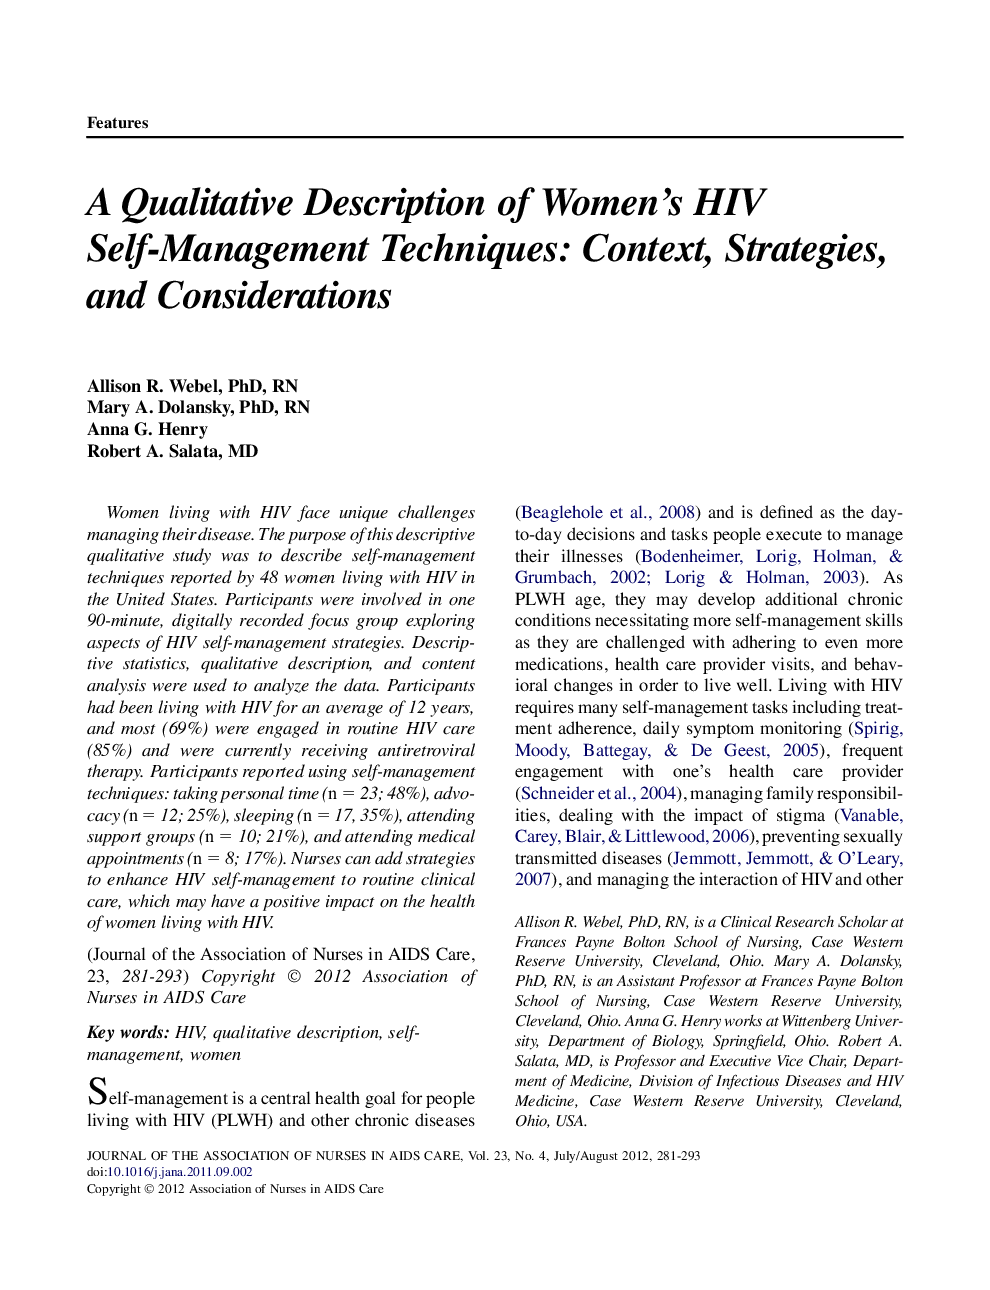 A Qualitative Description of Women’s HIV Self-Management Techniques: Context, Strategies, and Considerations